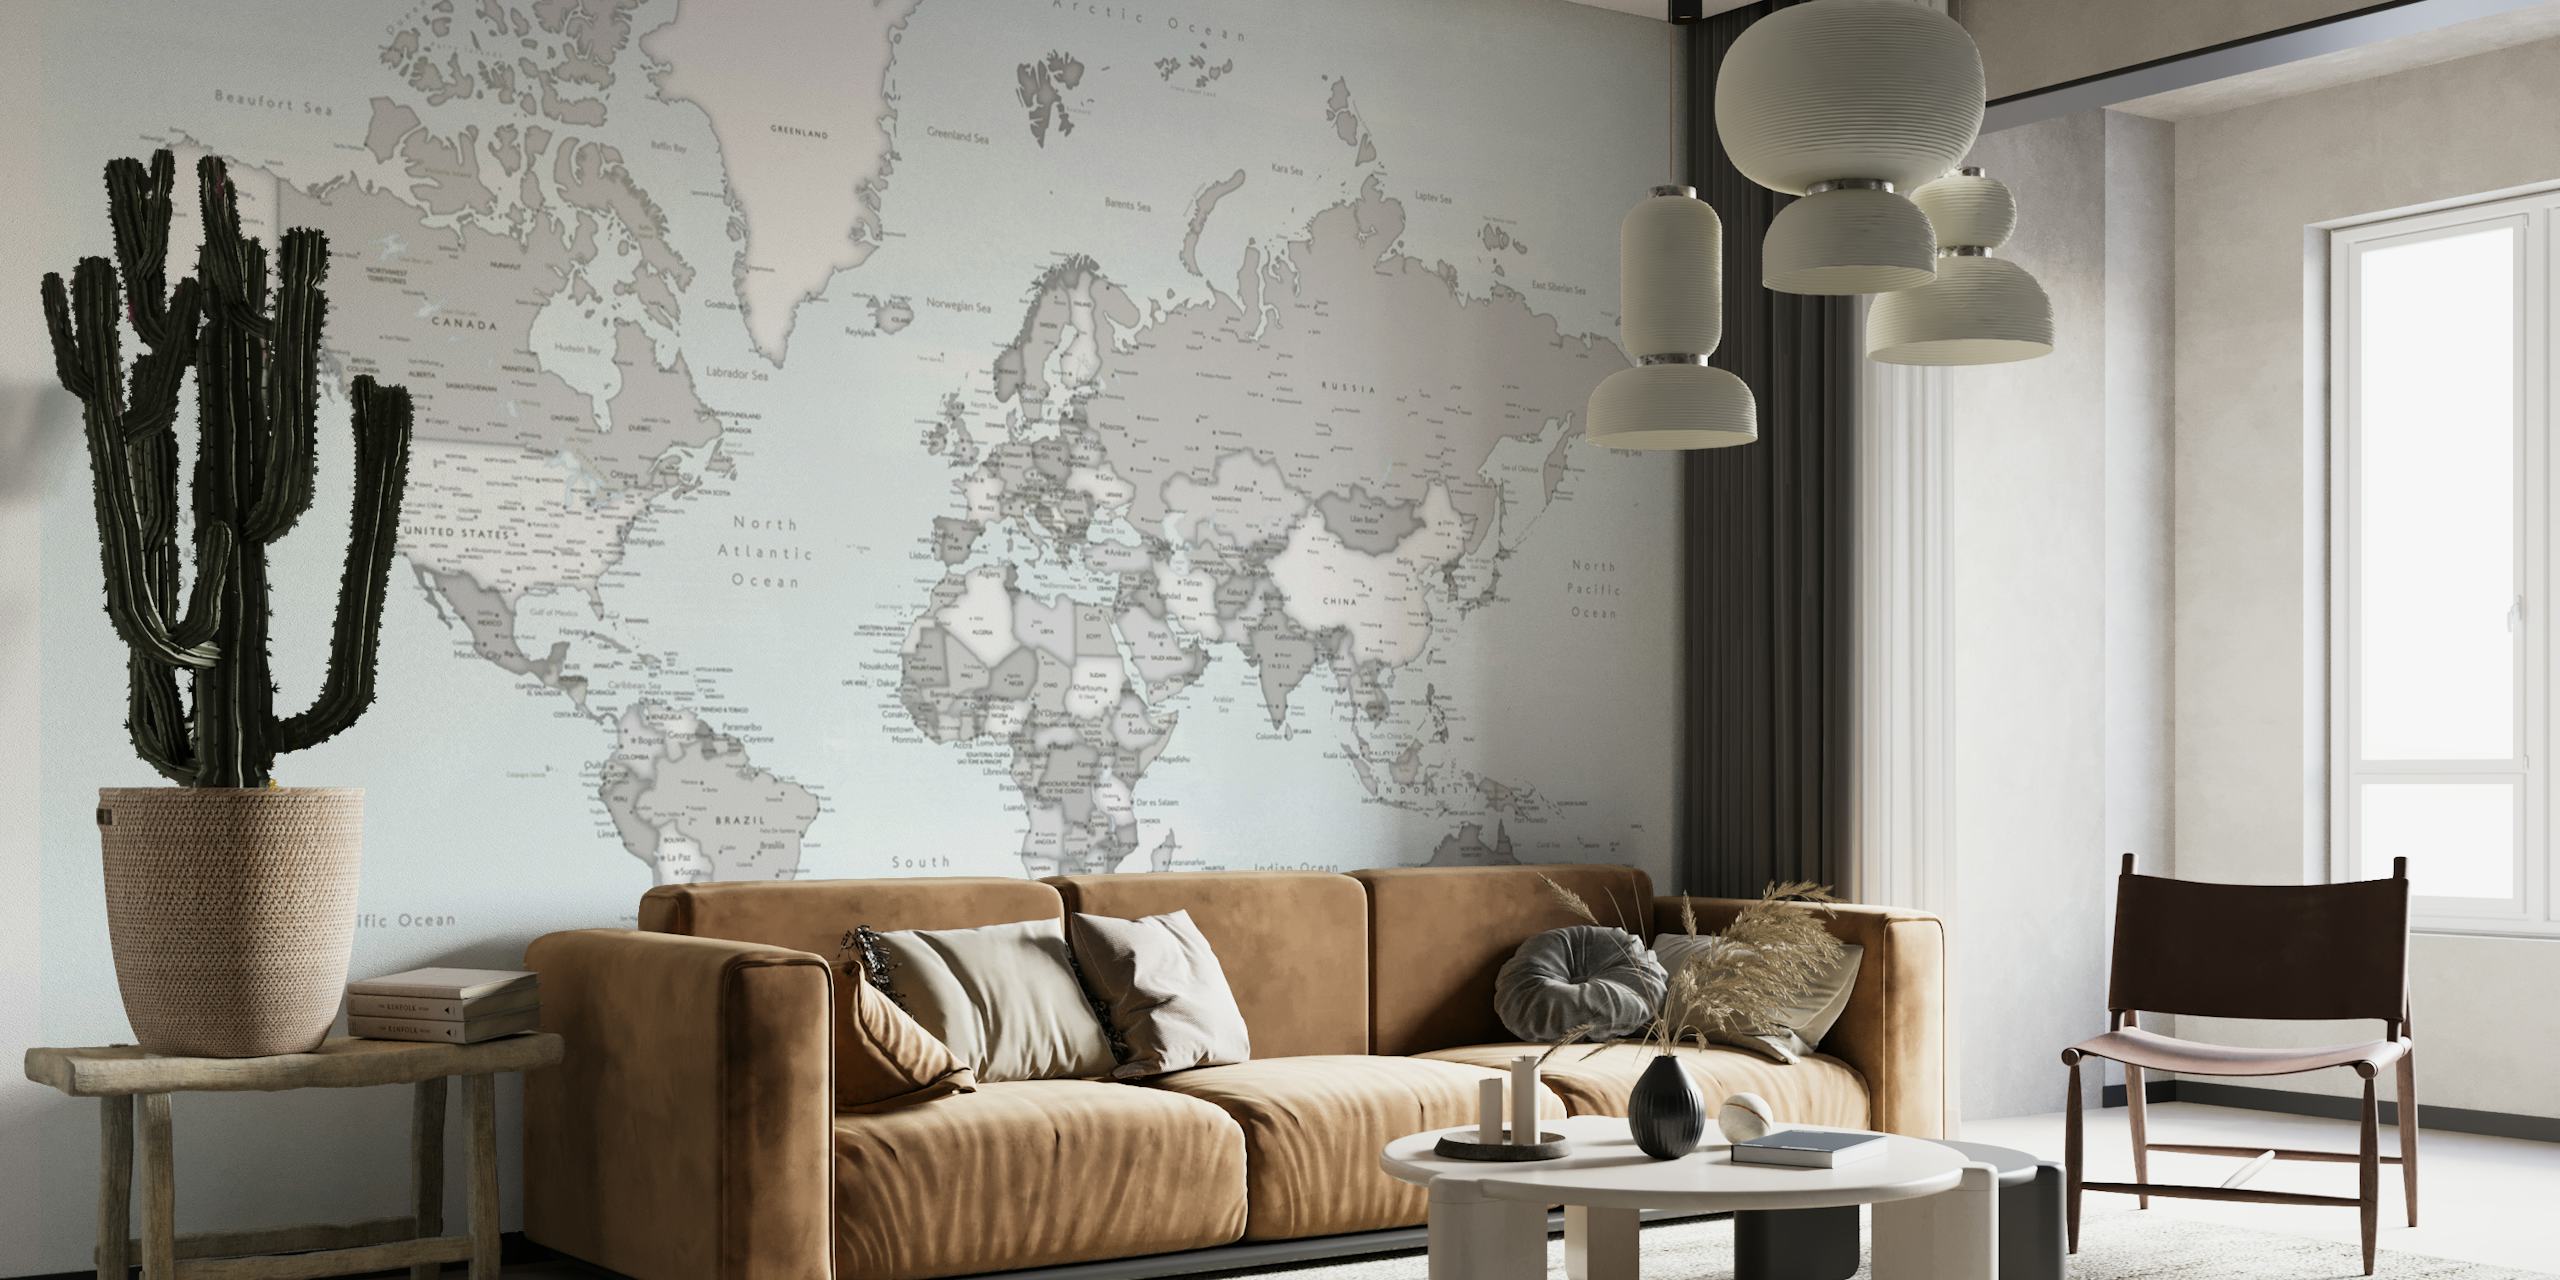 Darryl world map with cities papel pintado